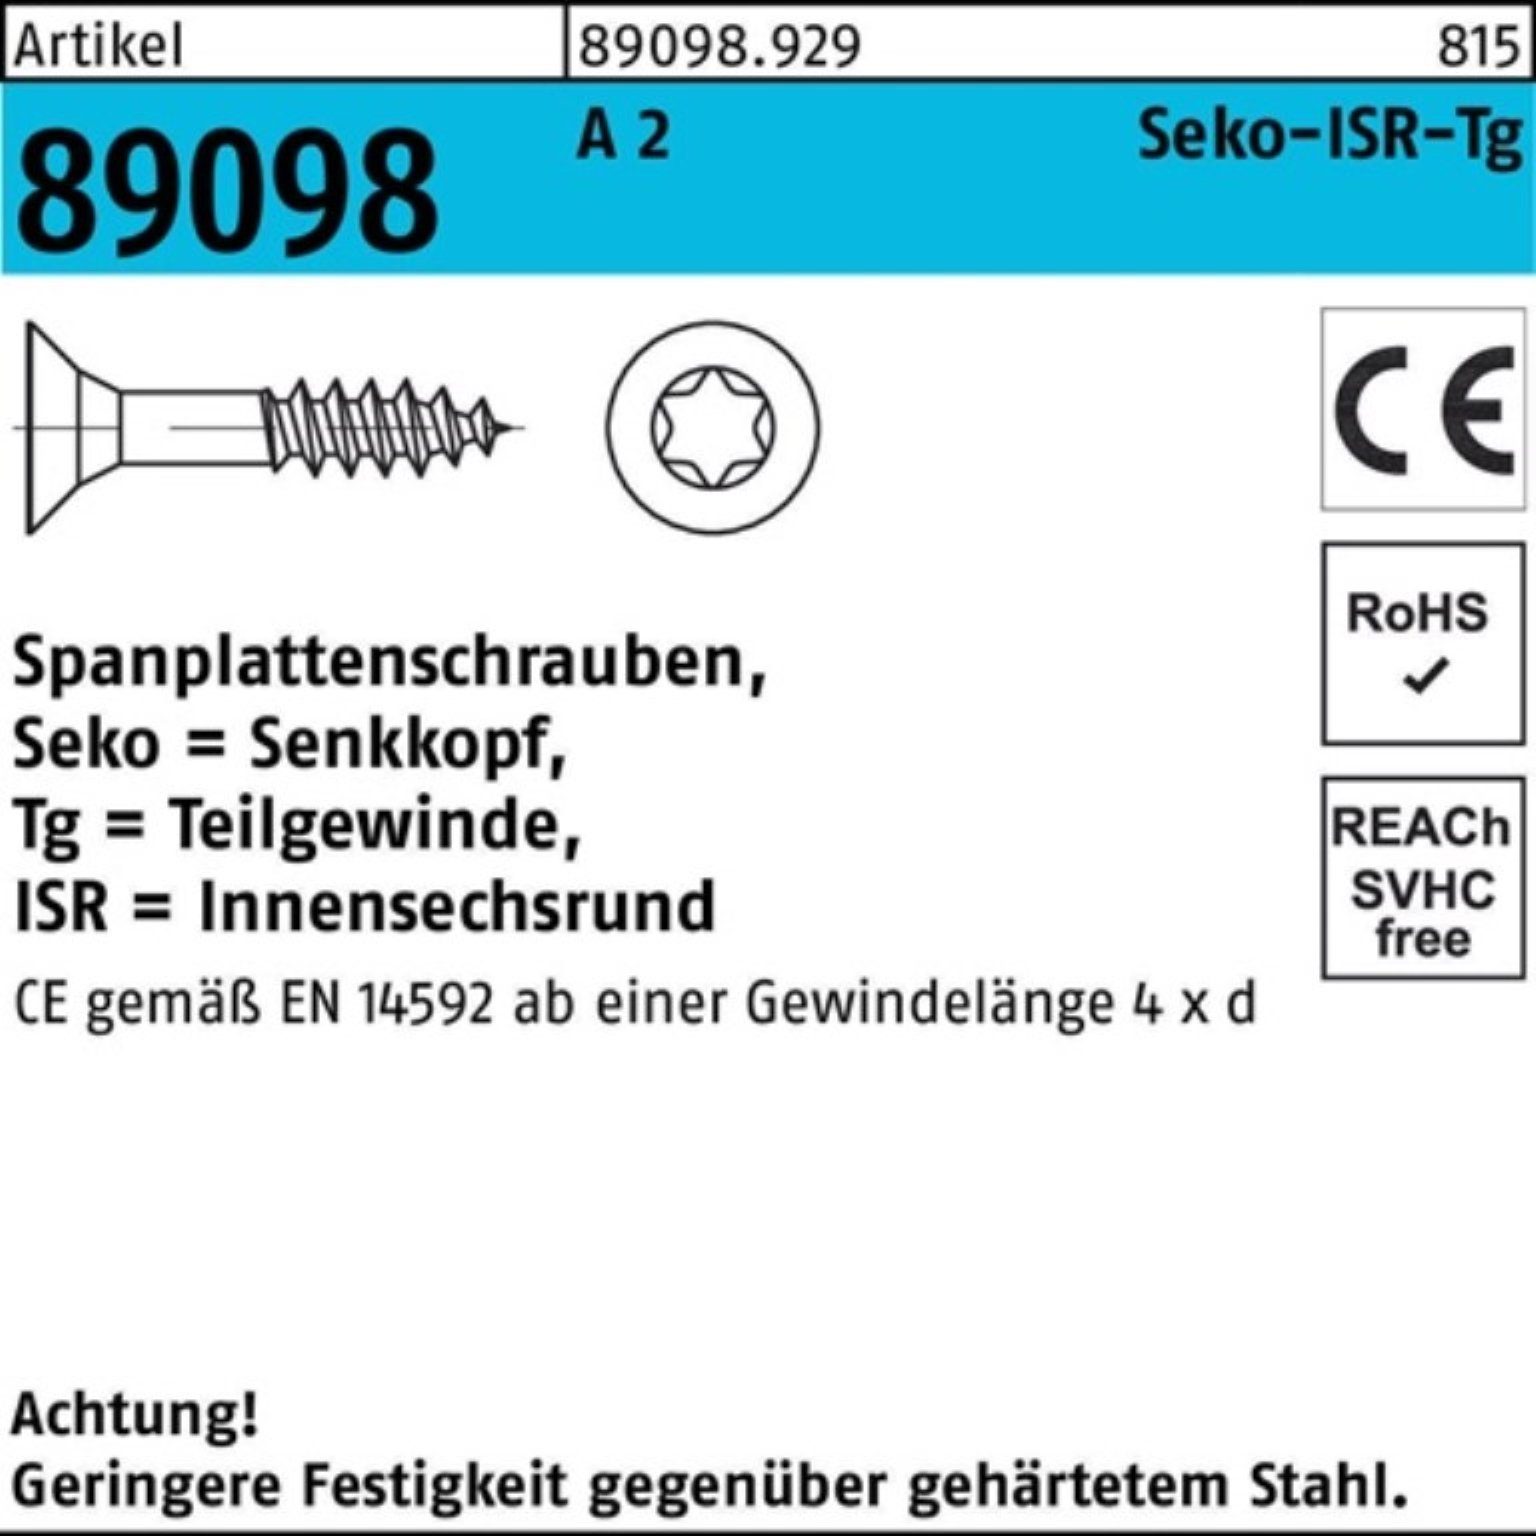 Reyher Spanplattenschraube 200er TG 2 ISR SEKO Spanplattenschraube 6x 89098 S A 200 90-T25 R Pack